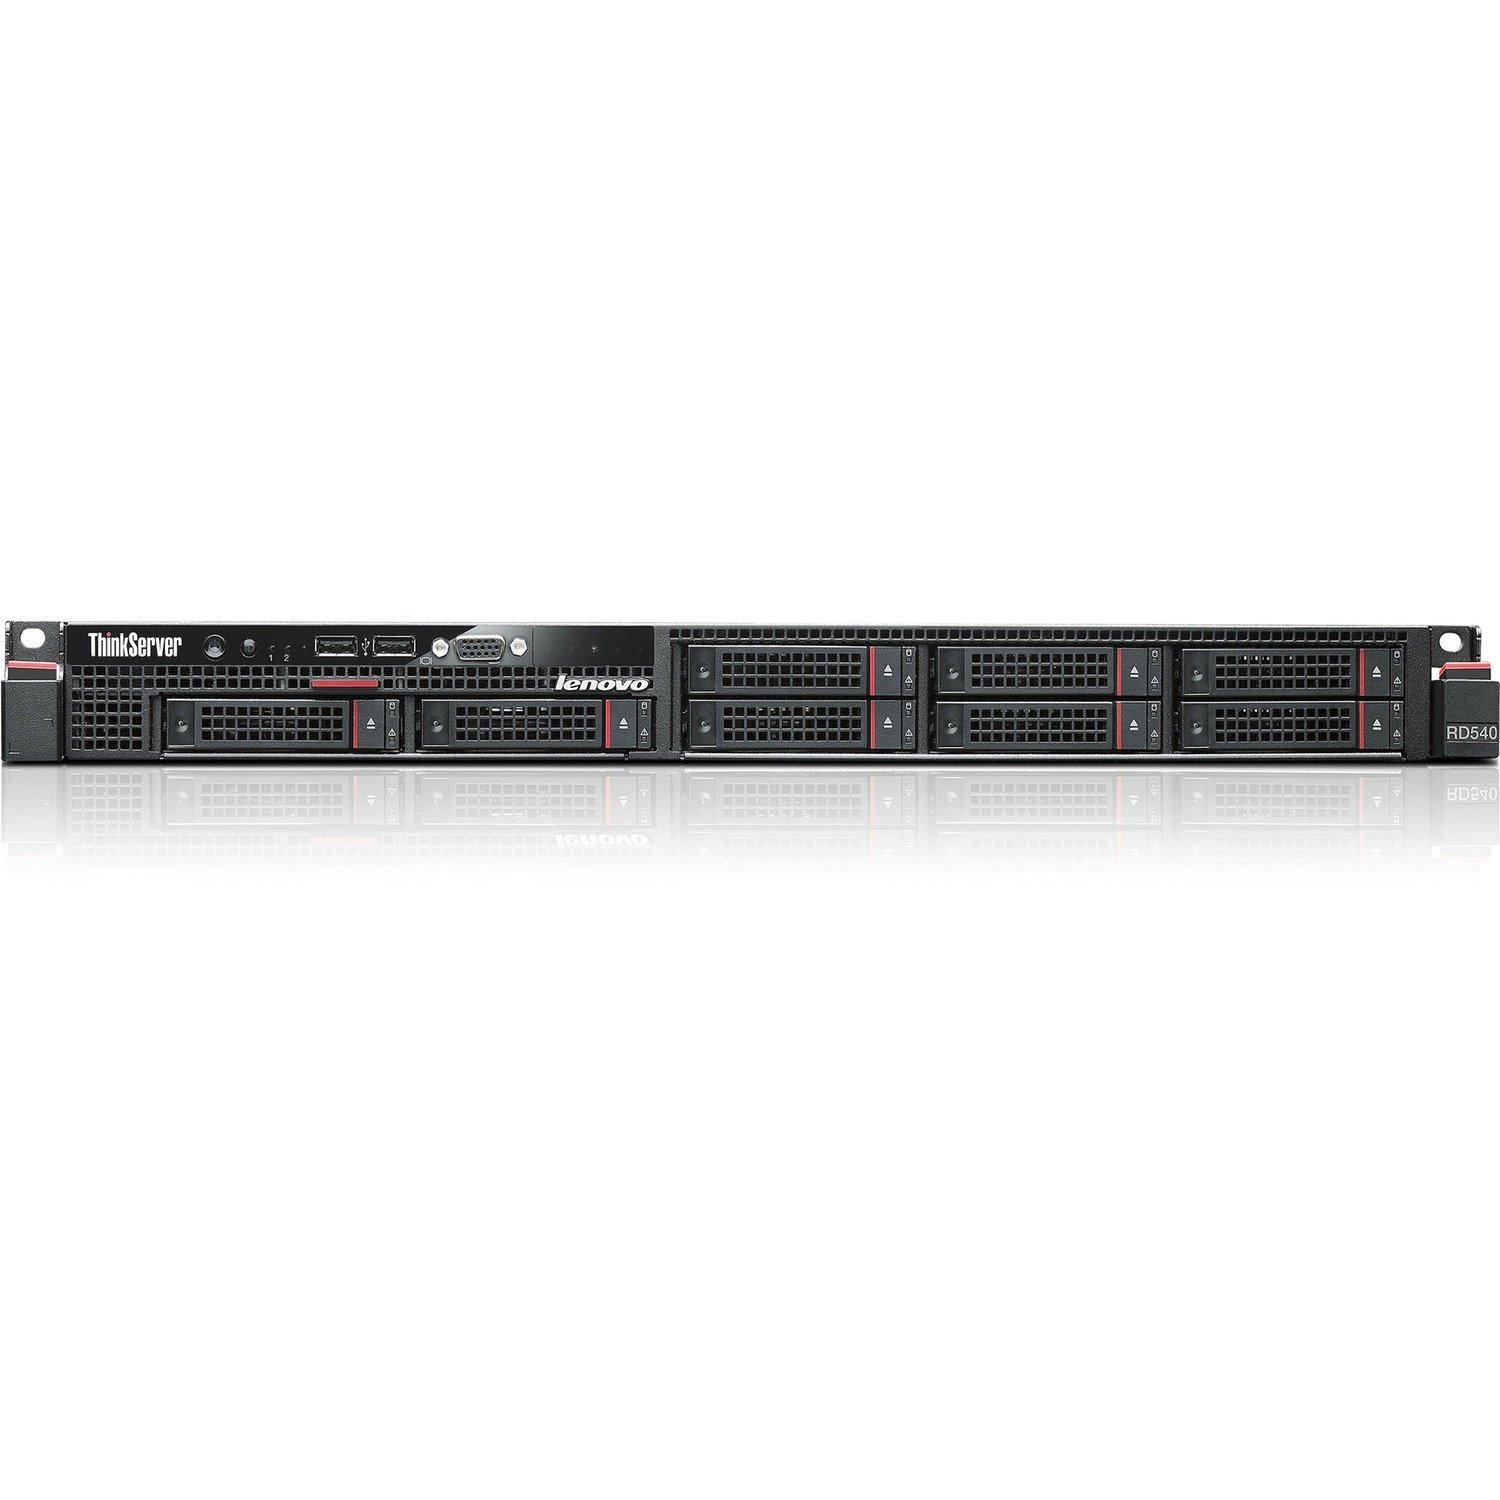 Lenovo ThinkServer RD540 70AR0000UX 1U Rack Server - 1 x Intel Xeon E5-2620 v2 2.10 GHz - 8 GB RAM - 6Gb/s SAS, Serial ATA/600 Controller